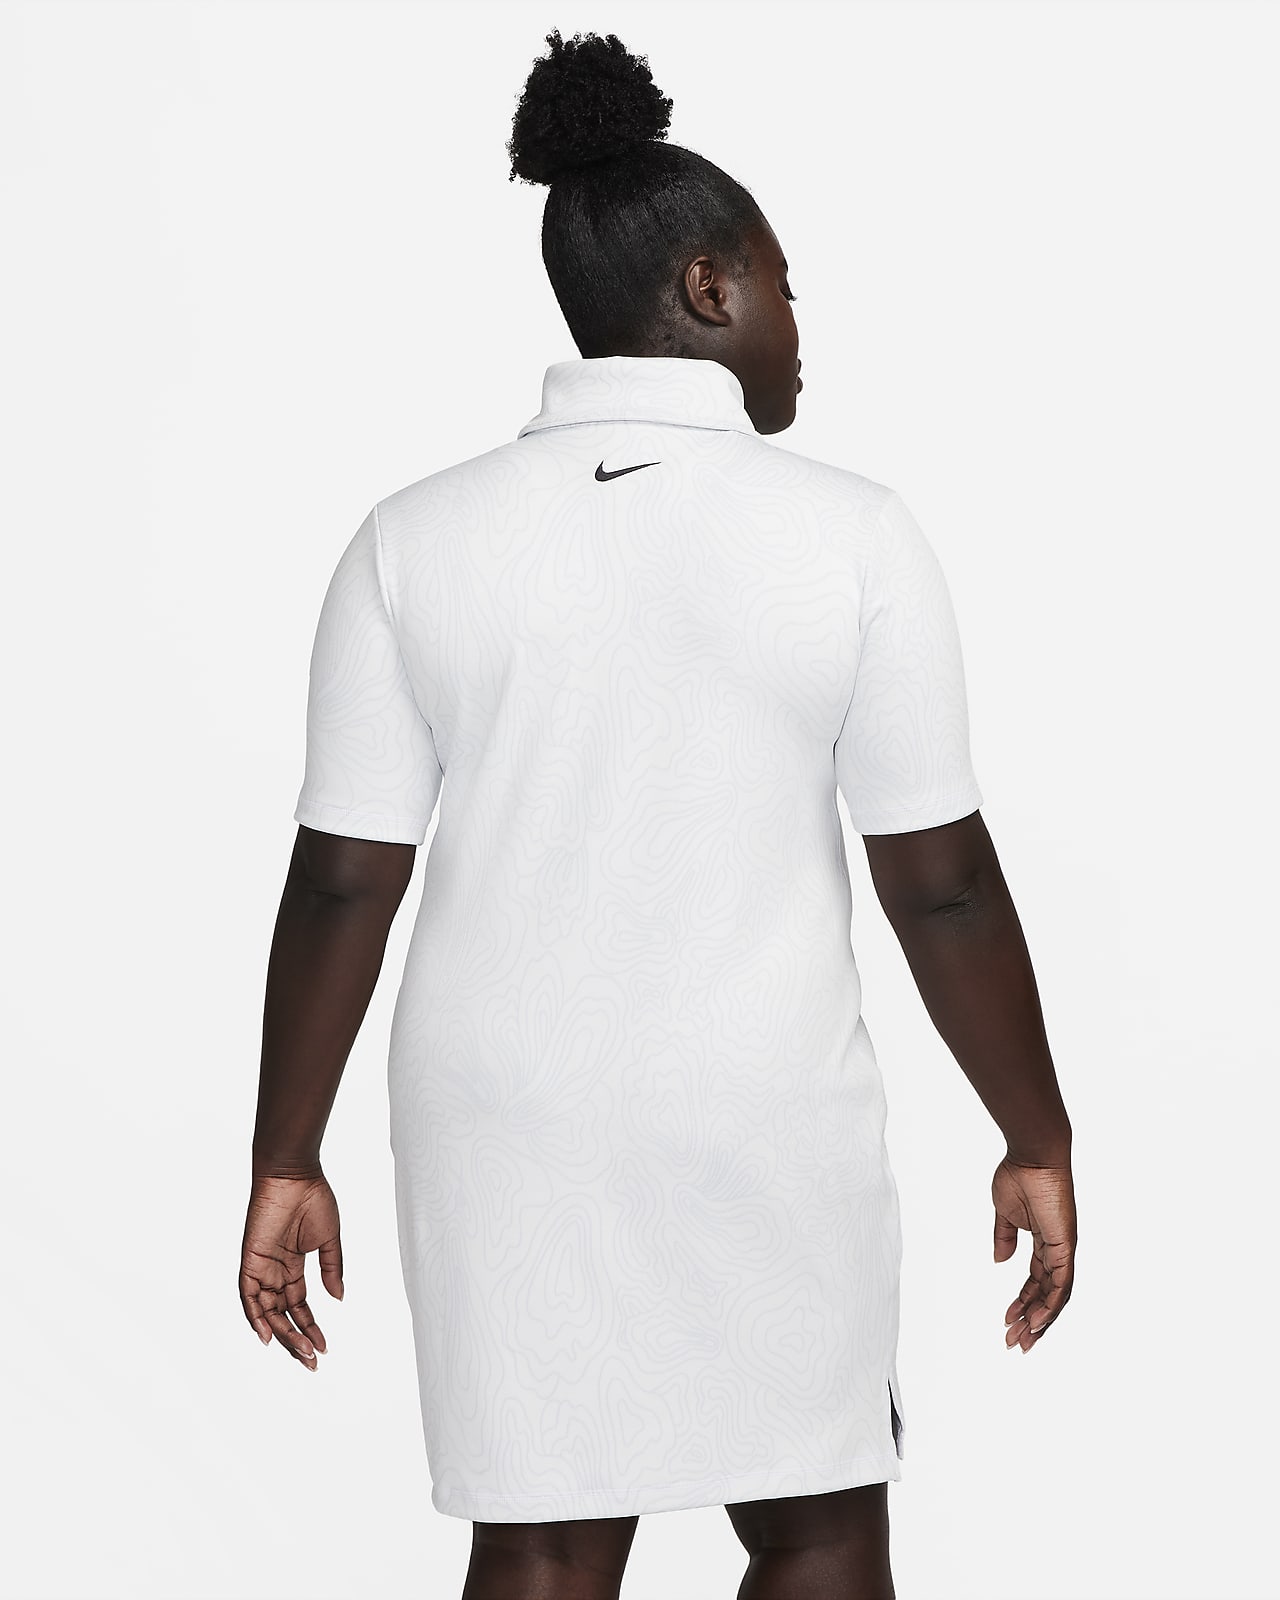 Nike Serena Williams Design Crew Tennis Jersey Dress in Black